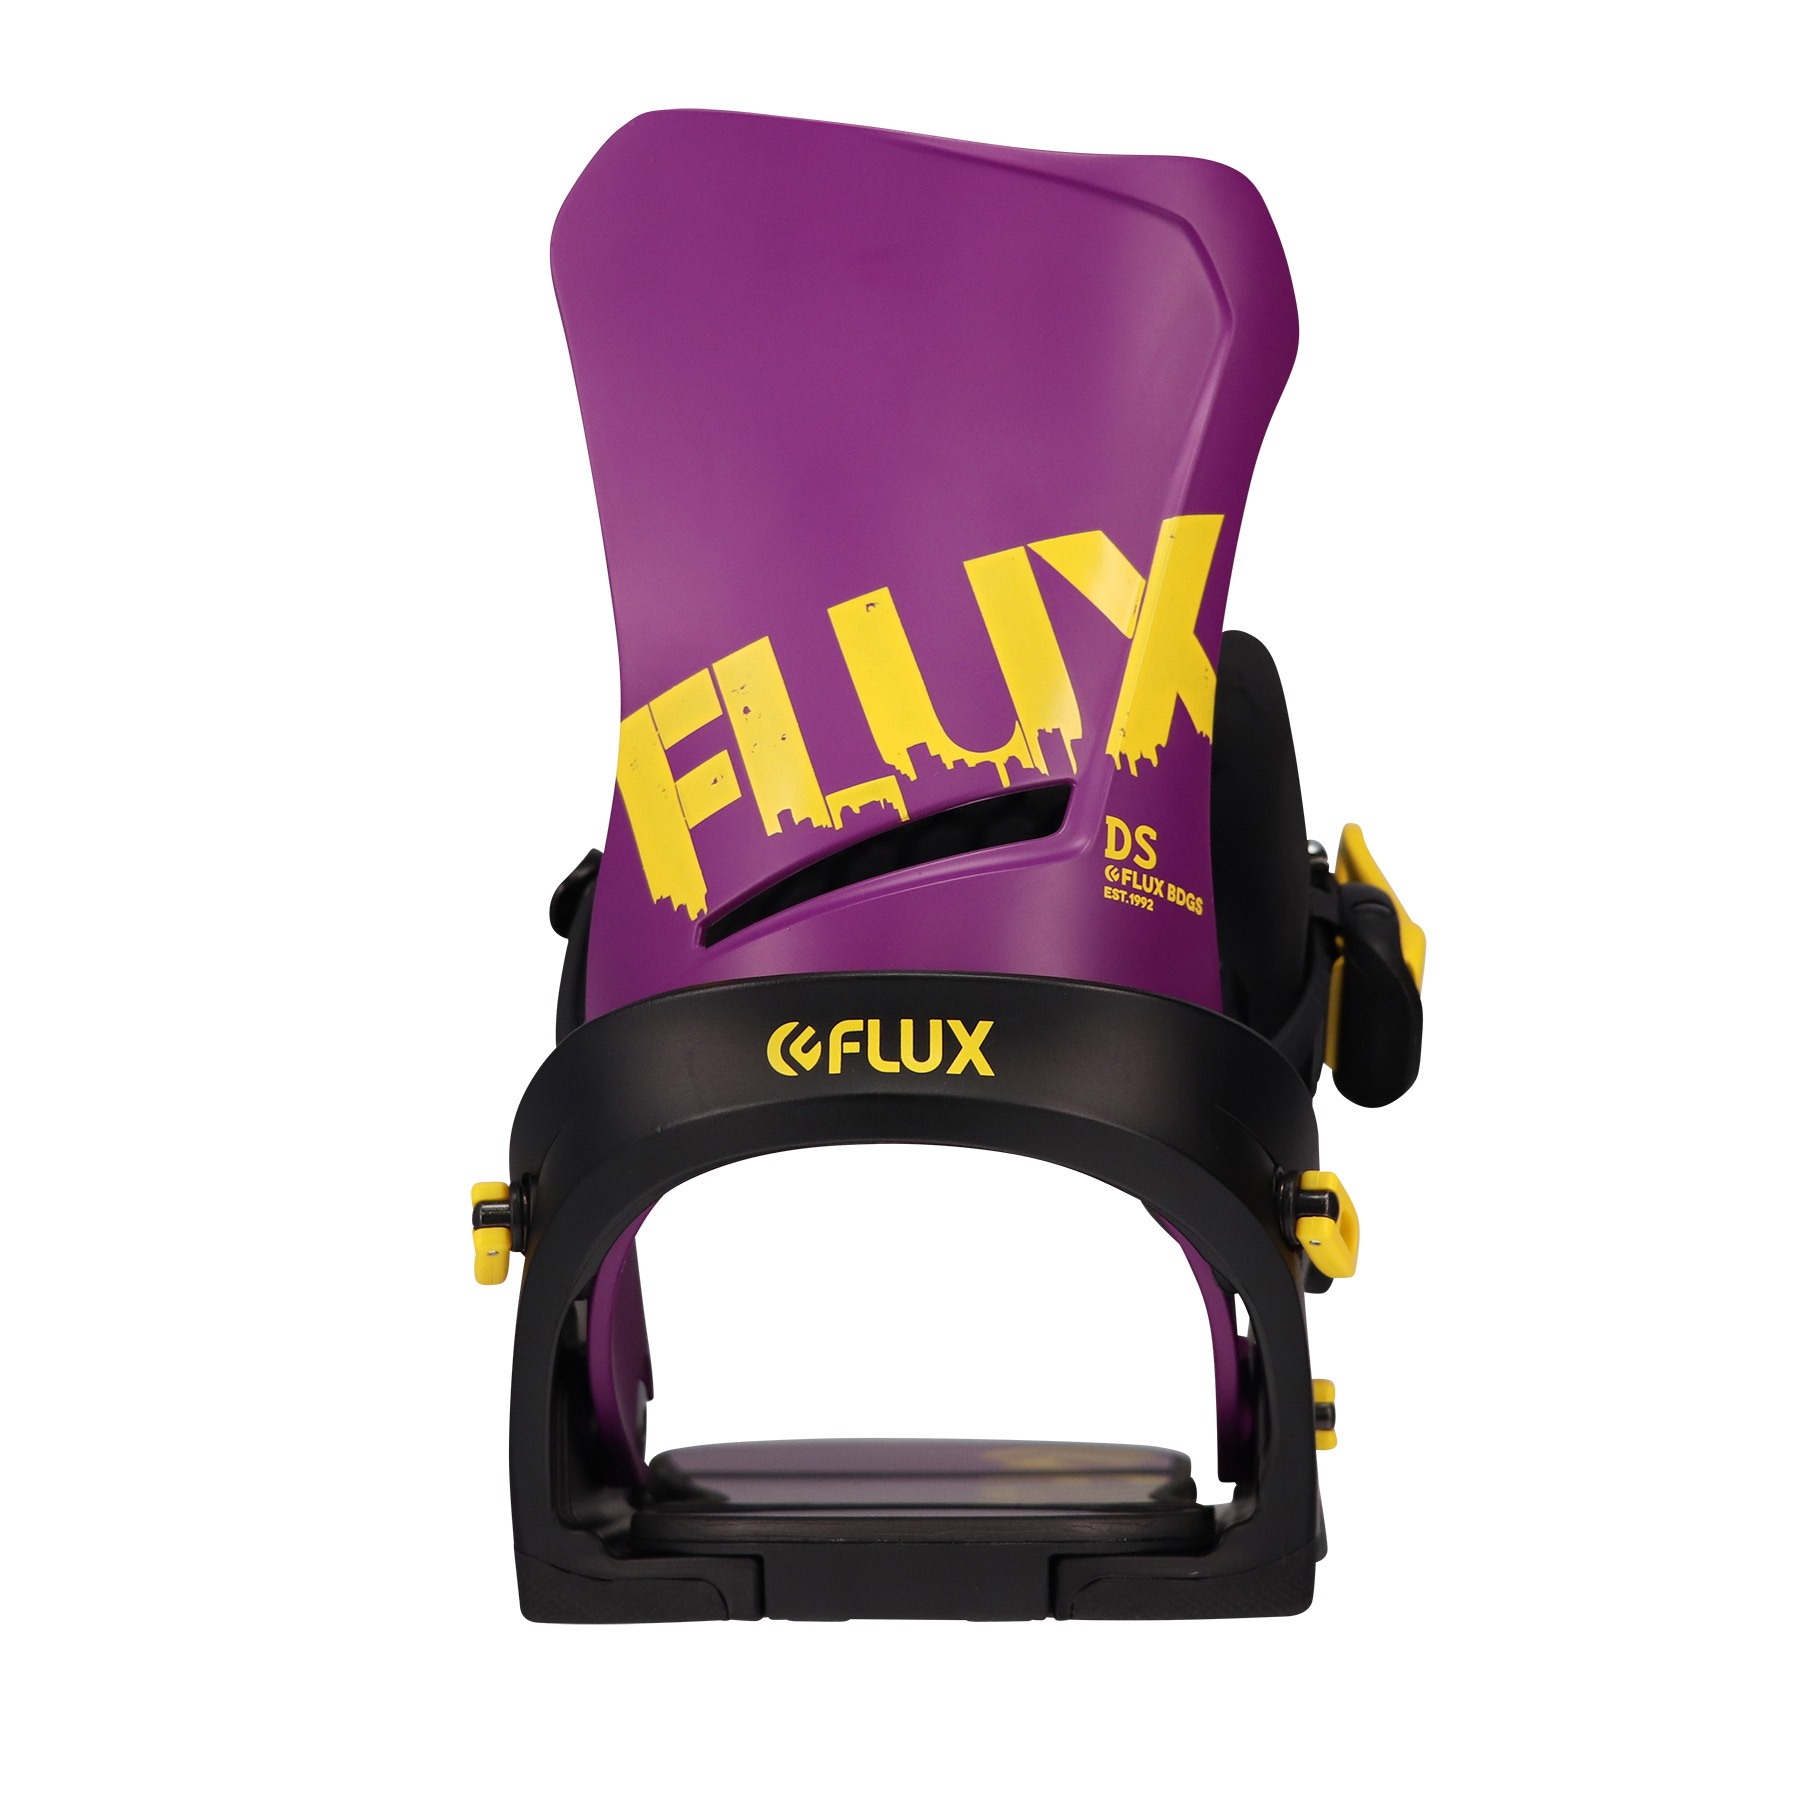 Крепления для сноуборда Flux DS Yellow/Purple 22-23 5